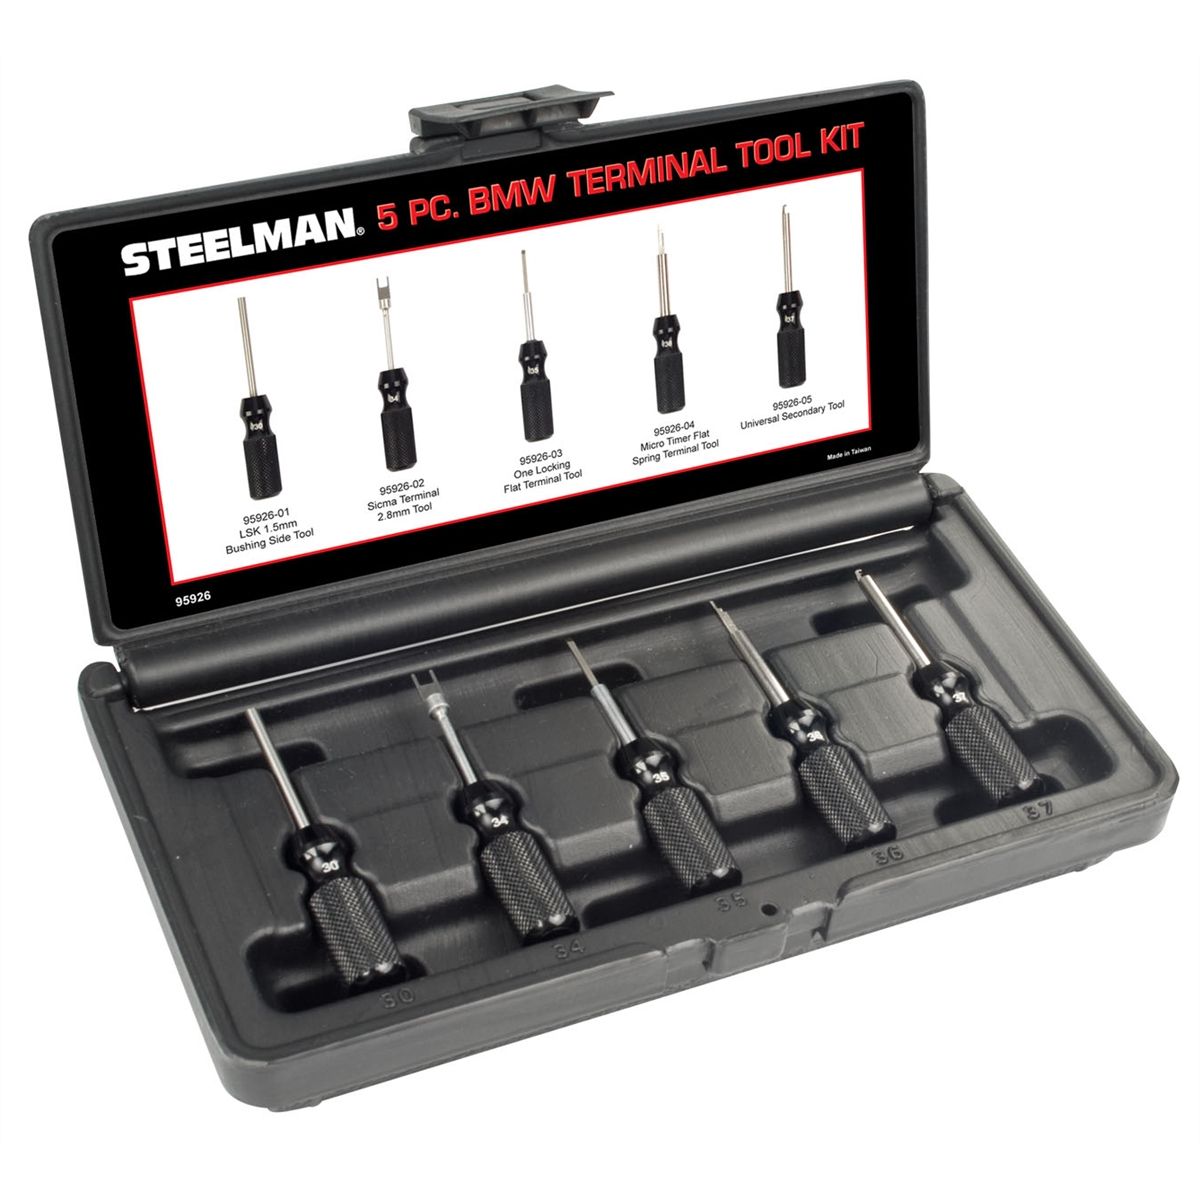 5 Piece BMW Terminal Tool Kit, Steelman